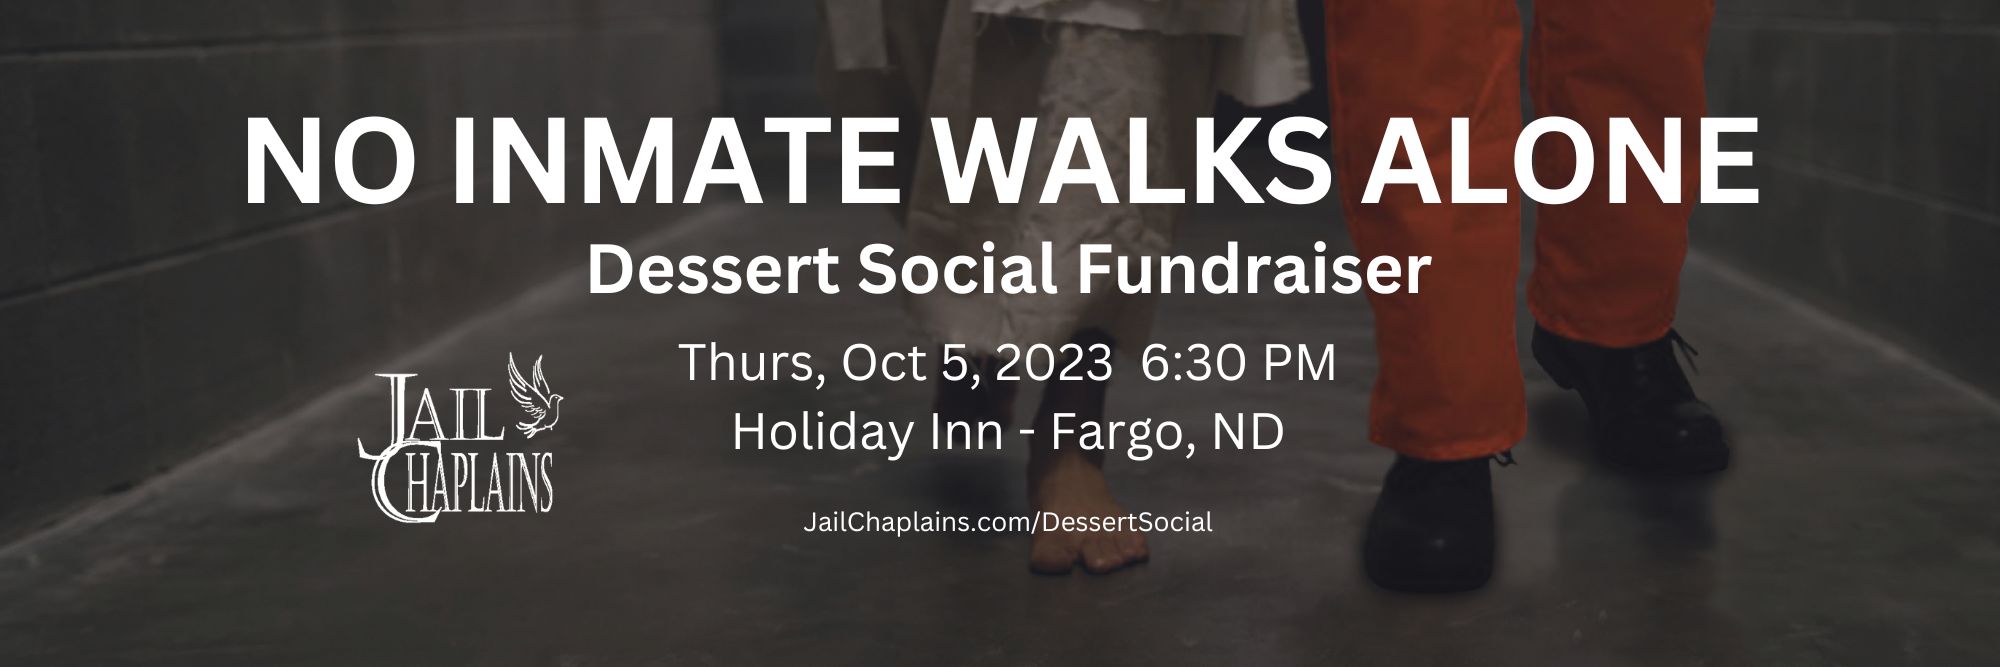 Dessert Social Fundraiser